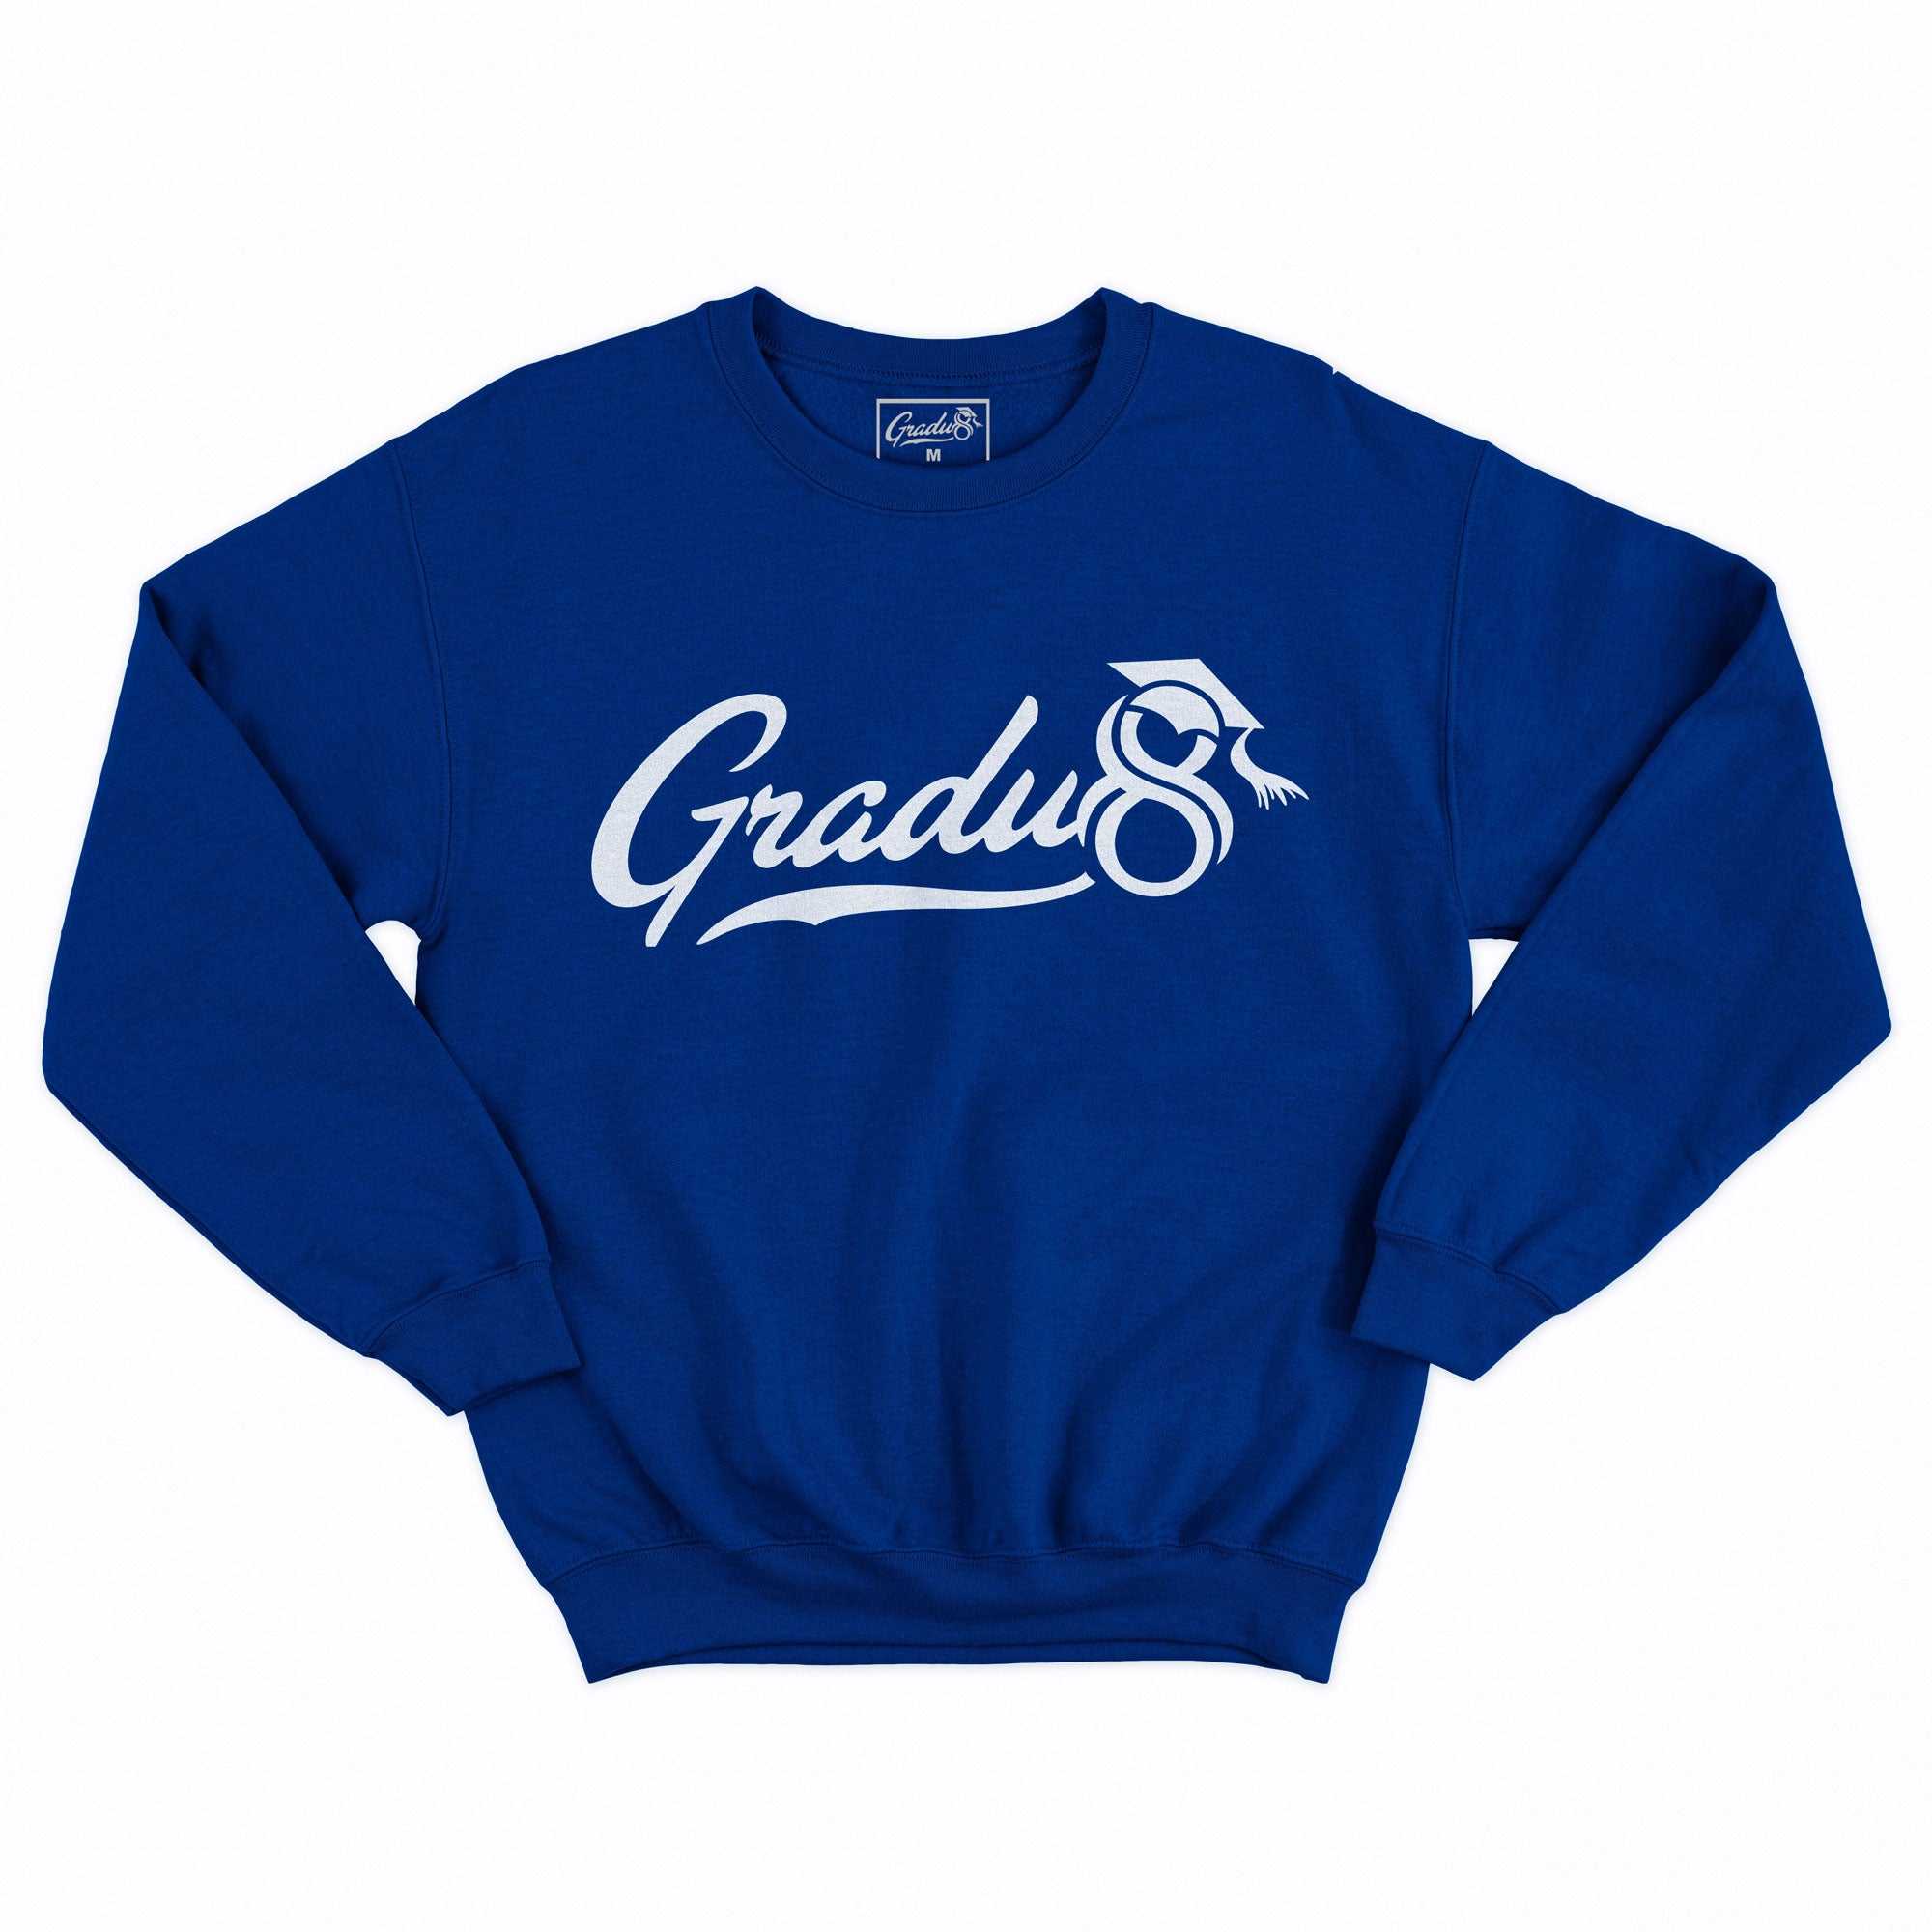 Official Gradu8 Premium Sweatshirt - Royal Blue